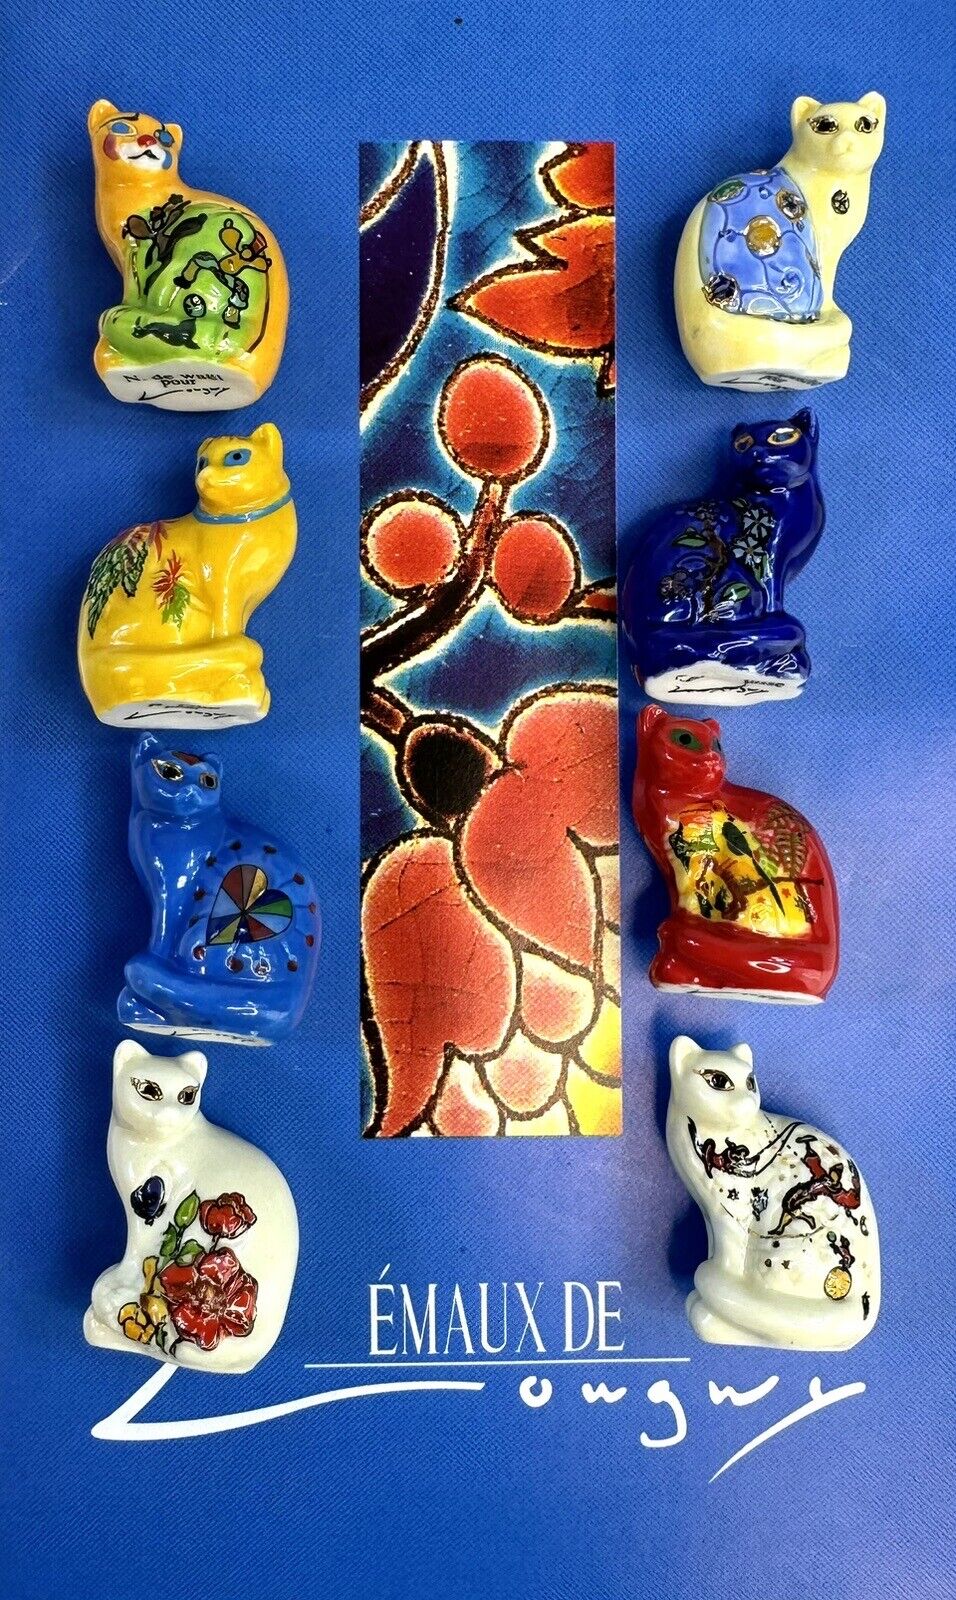 Emaux De Lowgwy Miniature Porcelain Cats Lot Of 8 France Hand Painted Figures